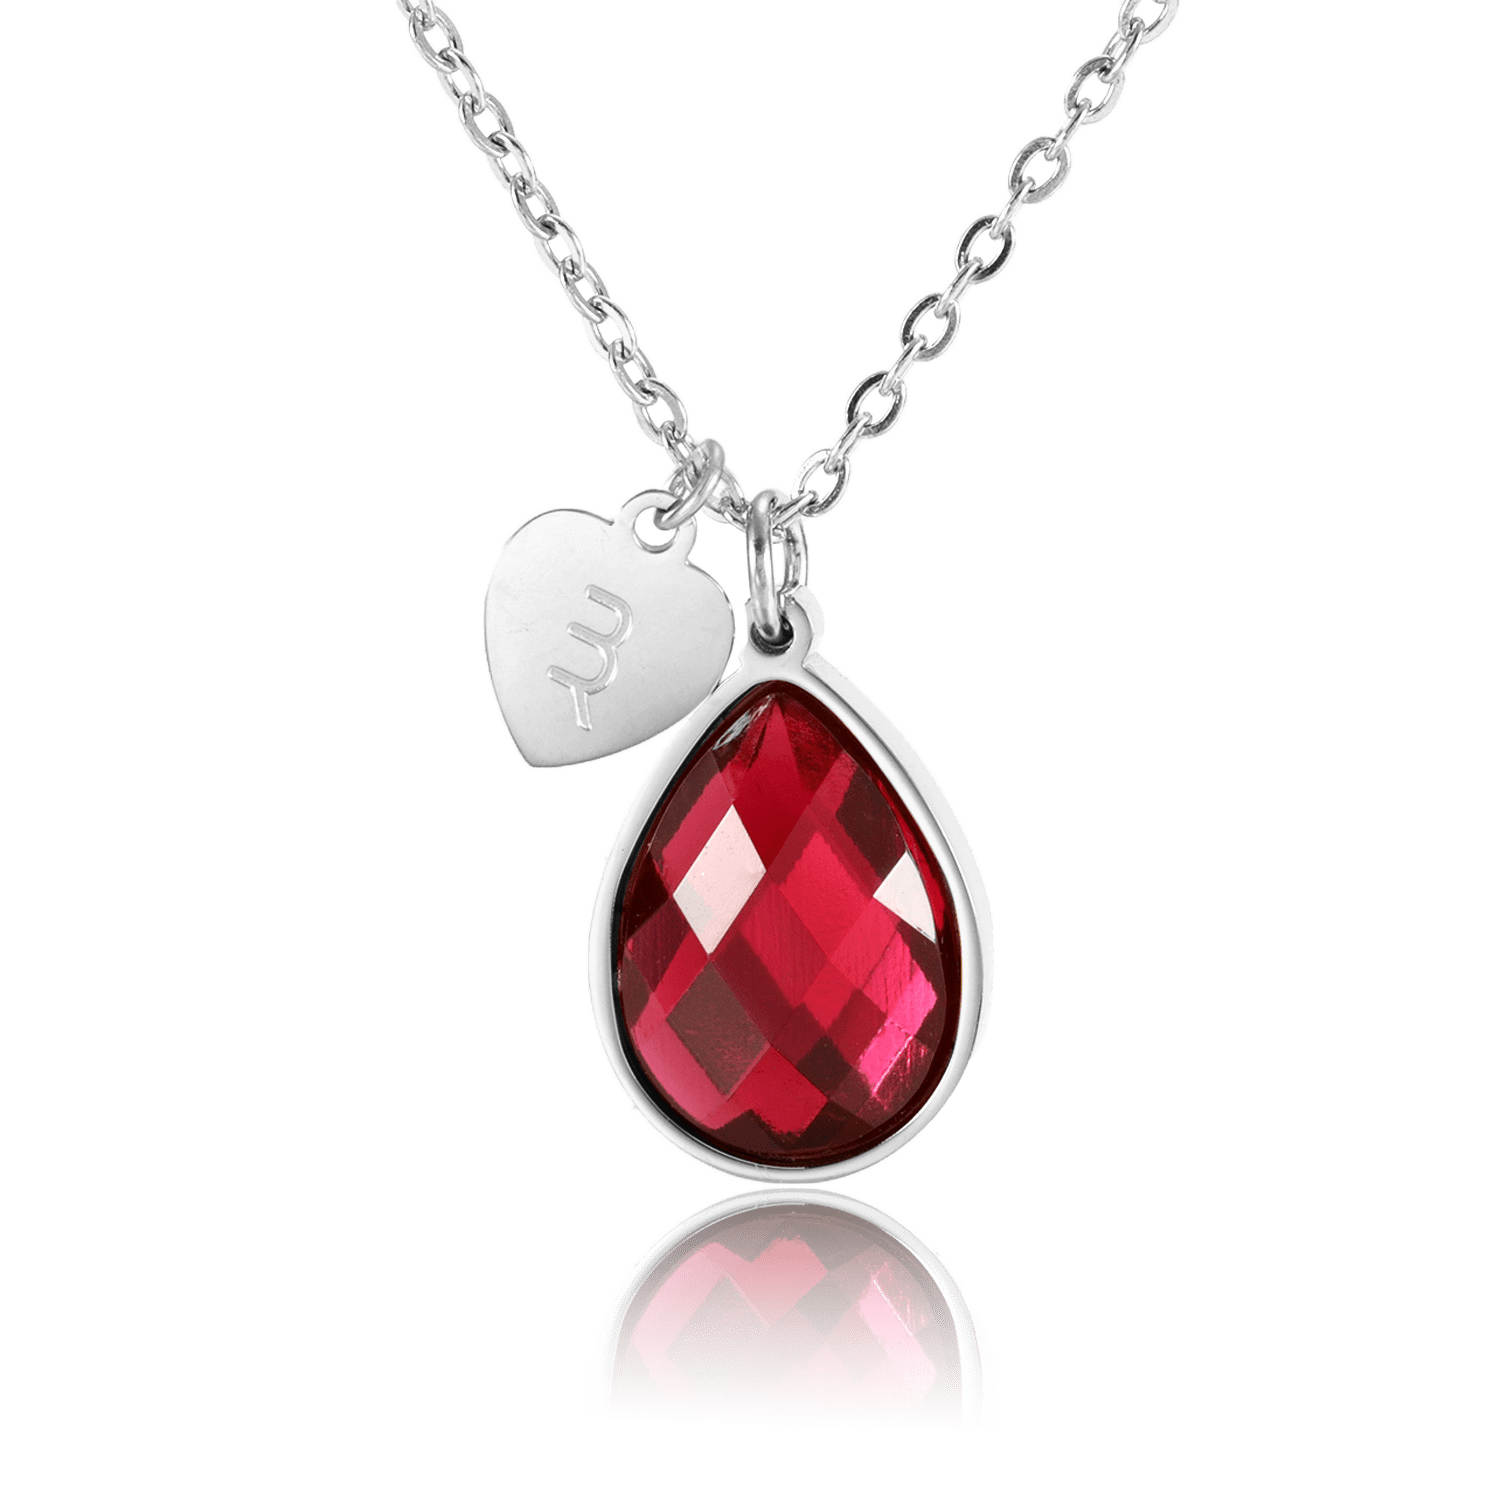 bianco rosso Necklaces Silver January Birthstone - Garnet cyprus greece jewelry gift free shipping europe worldwide